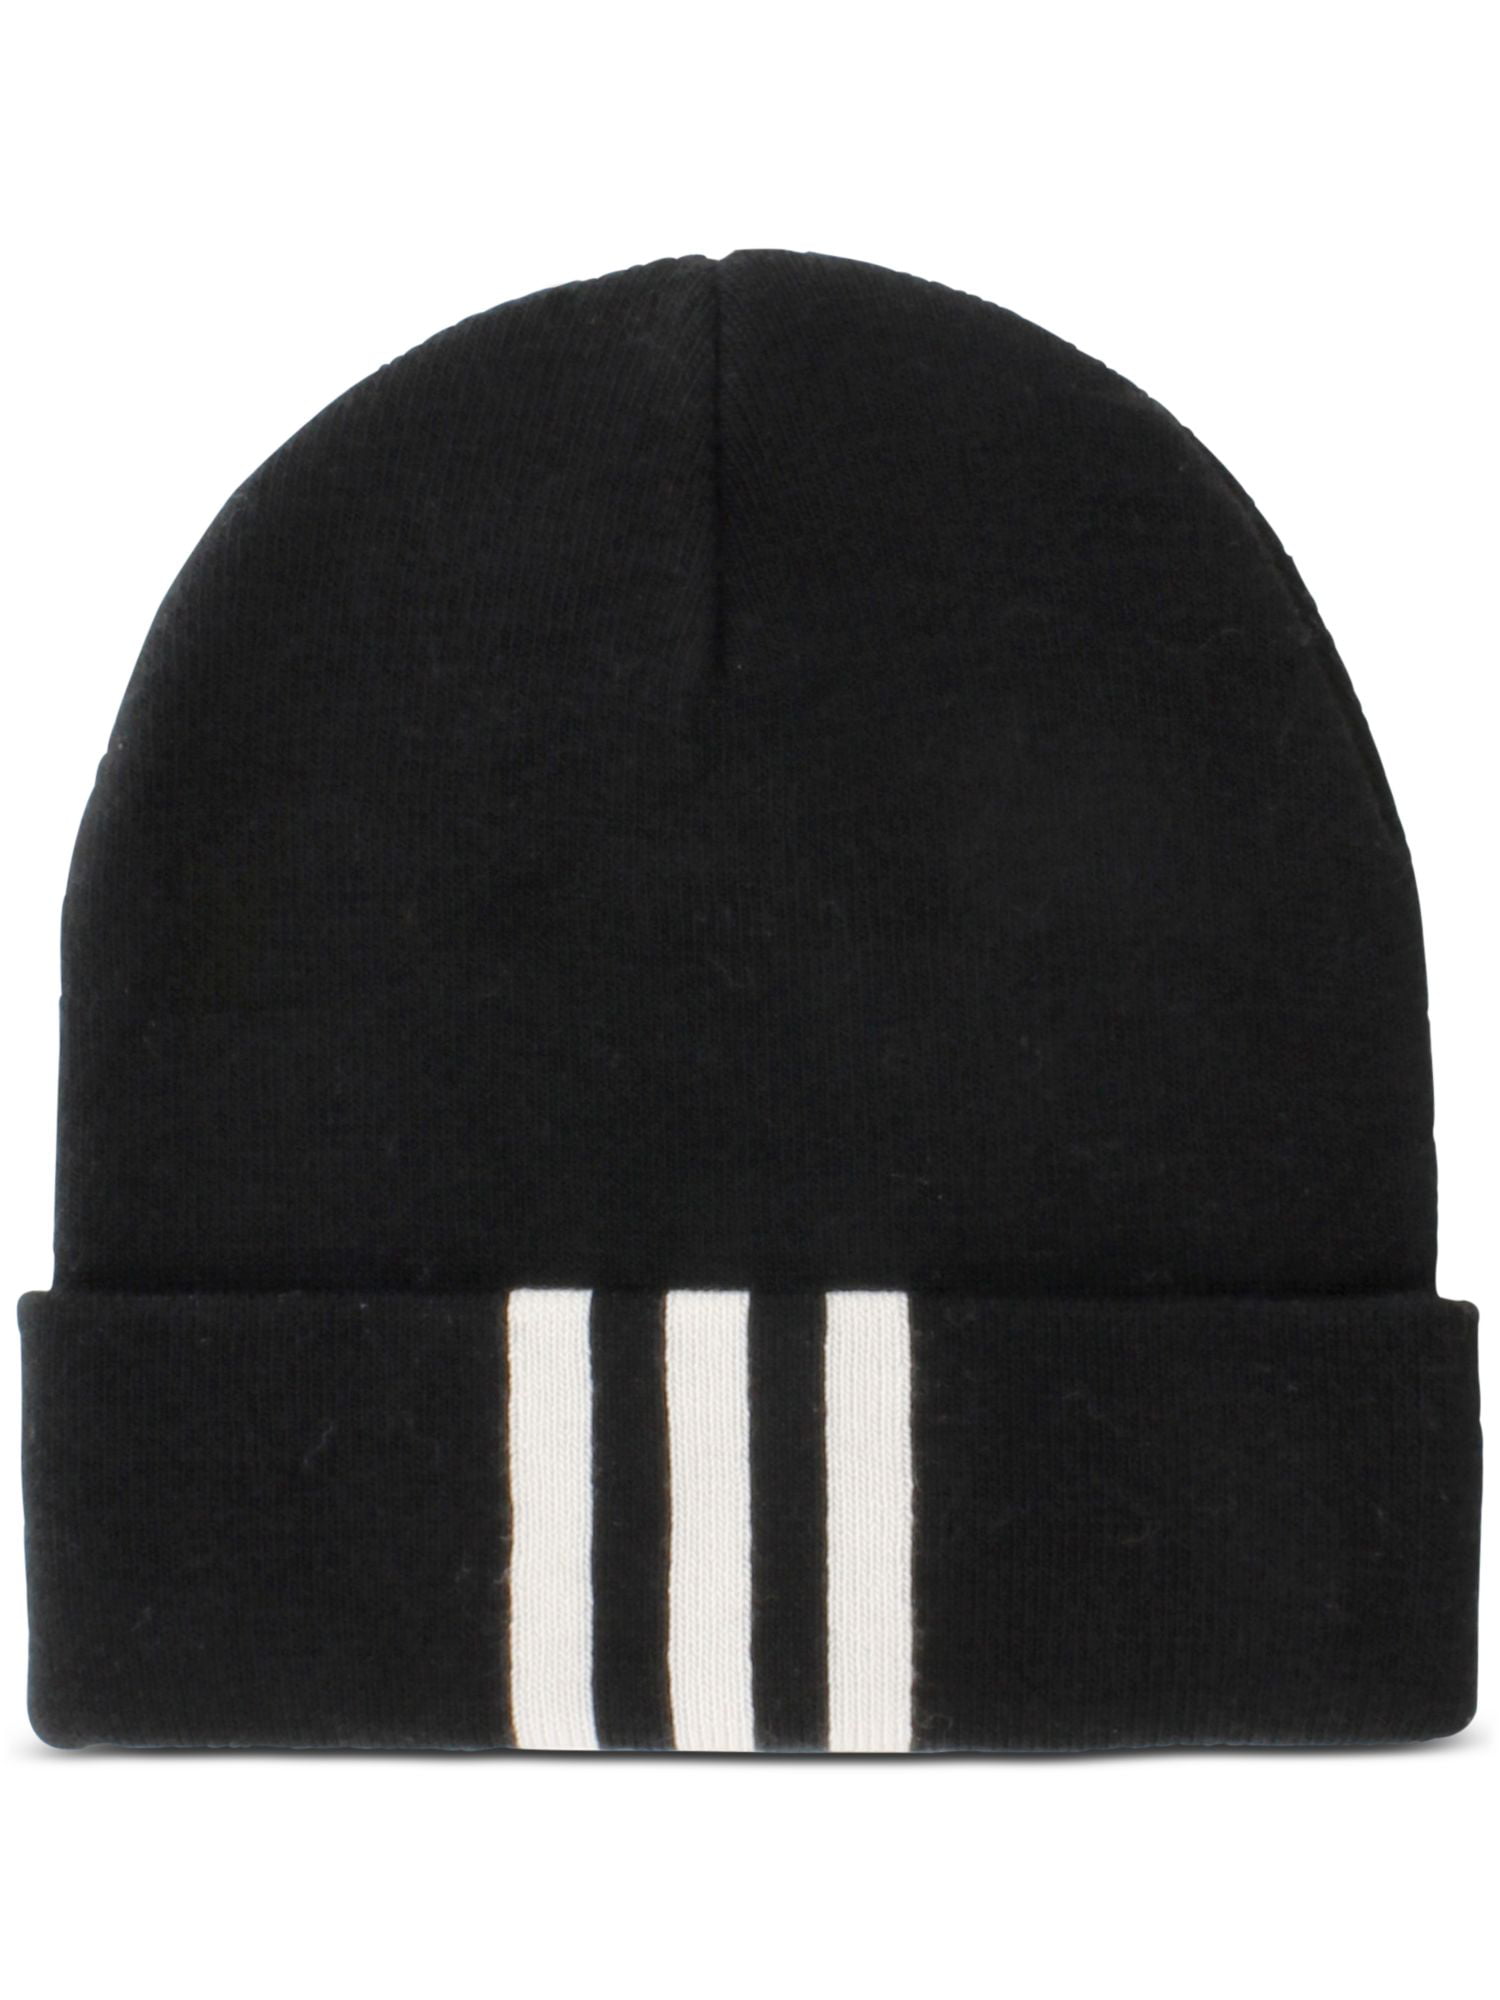 ADIDAS Mens Black Elastic Amplifier Hat Logo Cuff Cap Fold-Up Beanie Ribbed